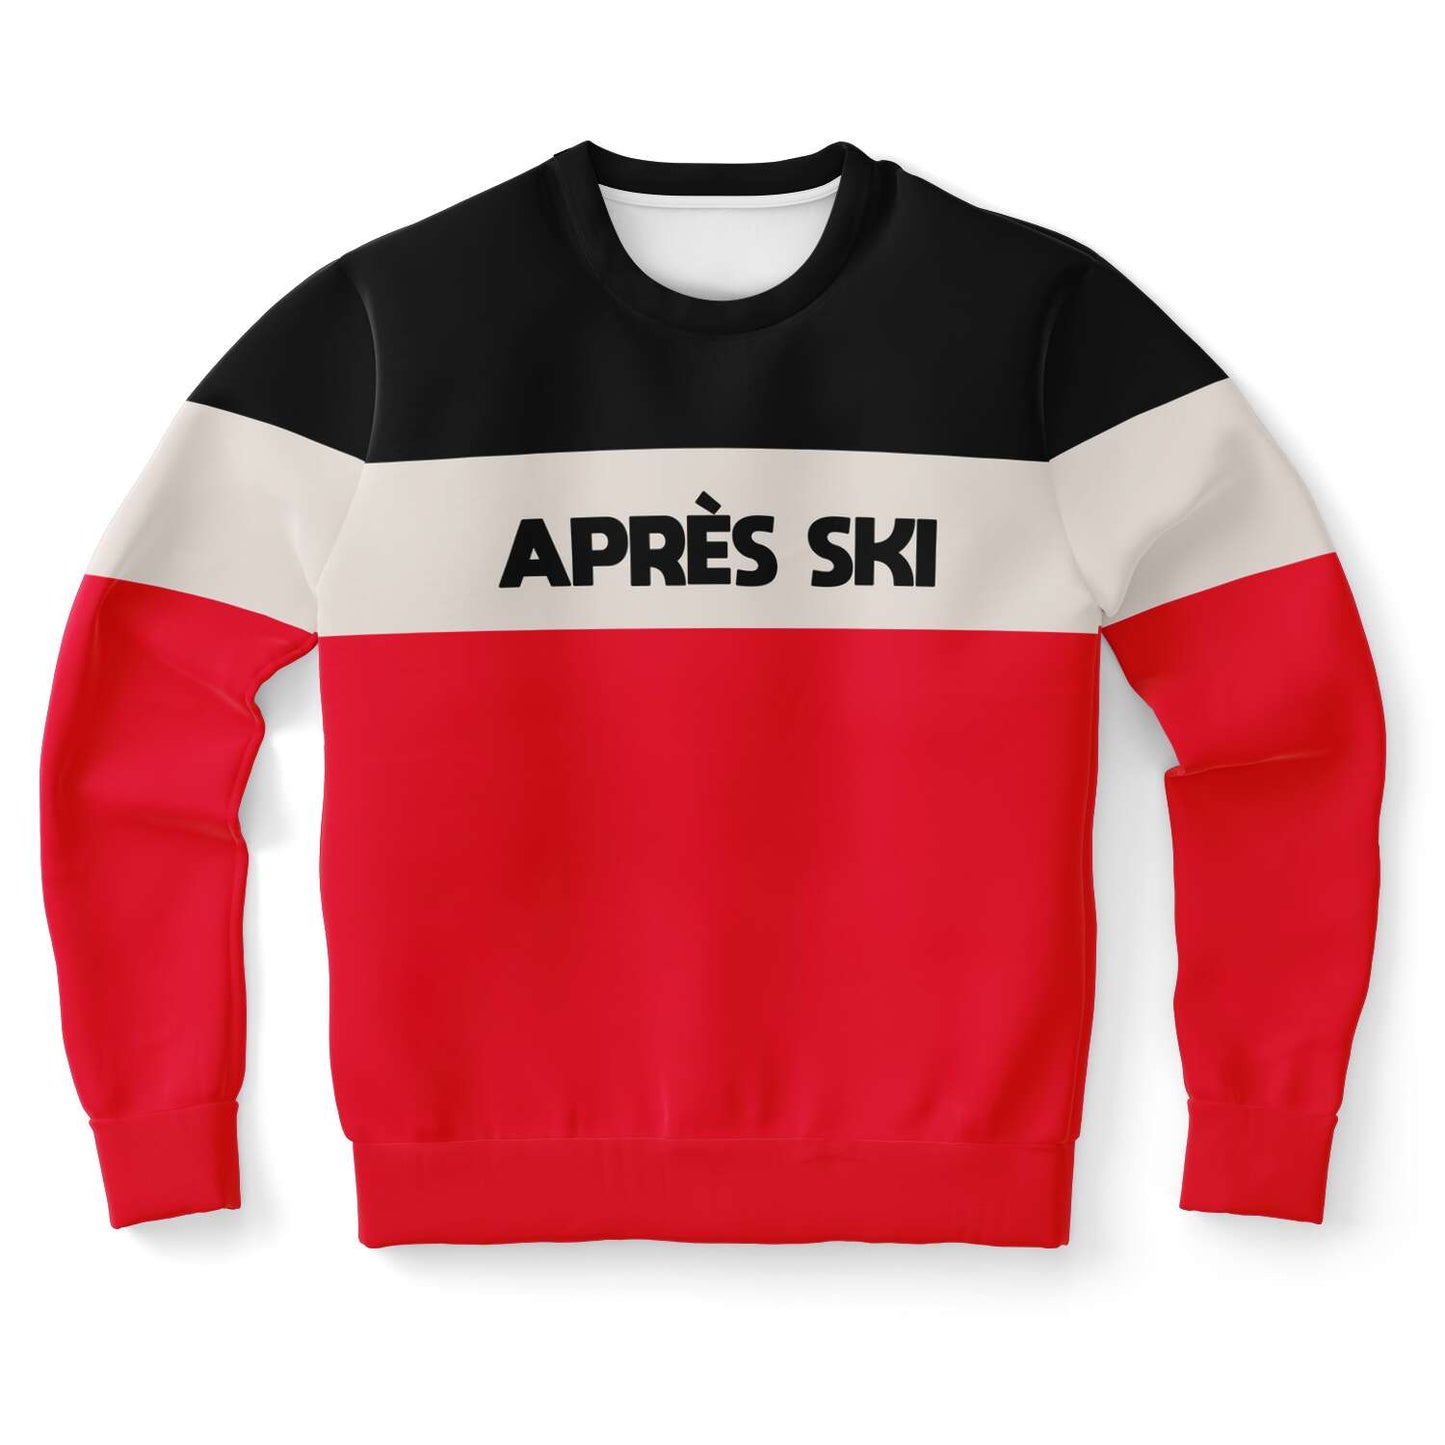 Apres Ski Sweatshirt, Women Men Black Red Color Block Skiing Skier Snow 90s Vintage Retro Cotton Winter Holiday Mountain Sweater Starcove Fashion